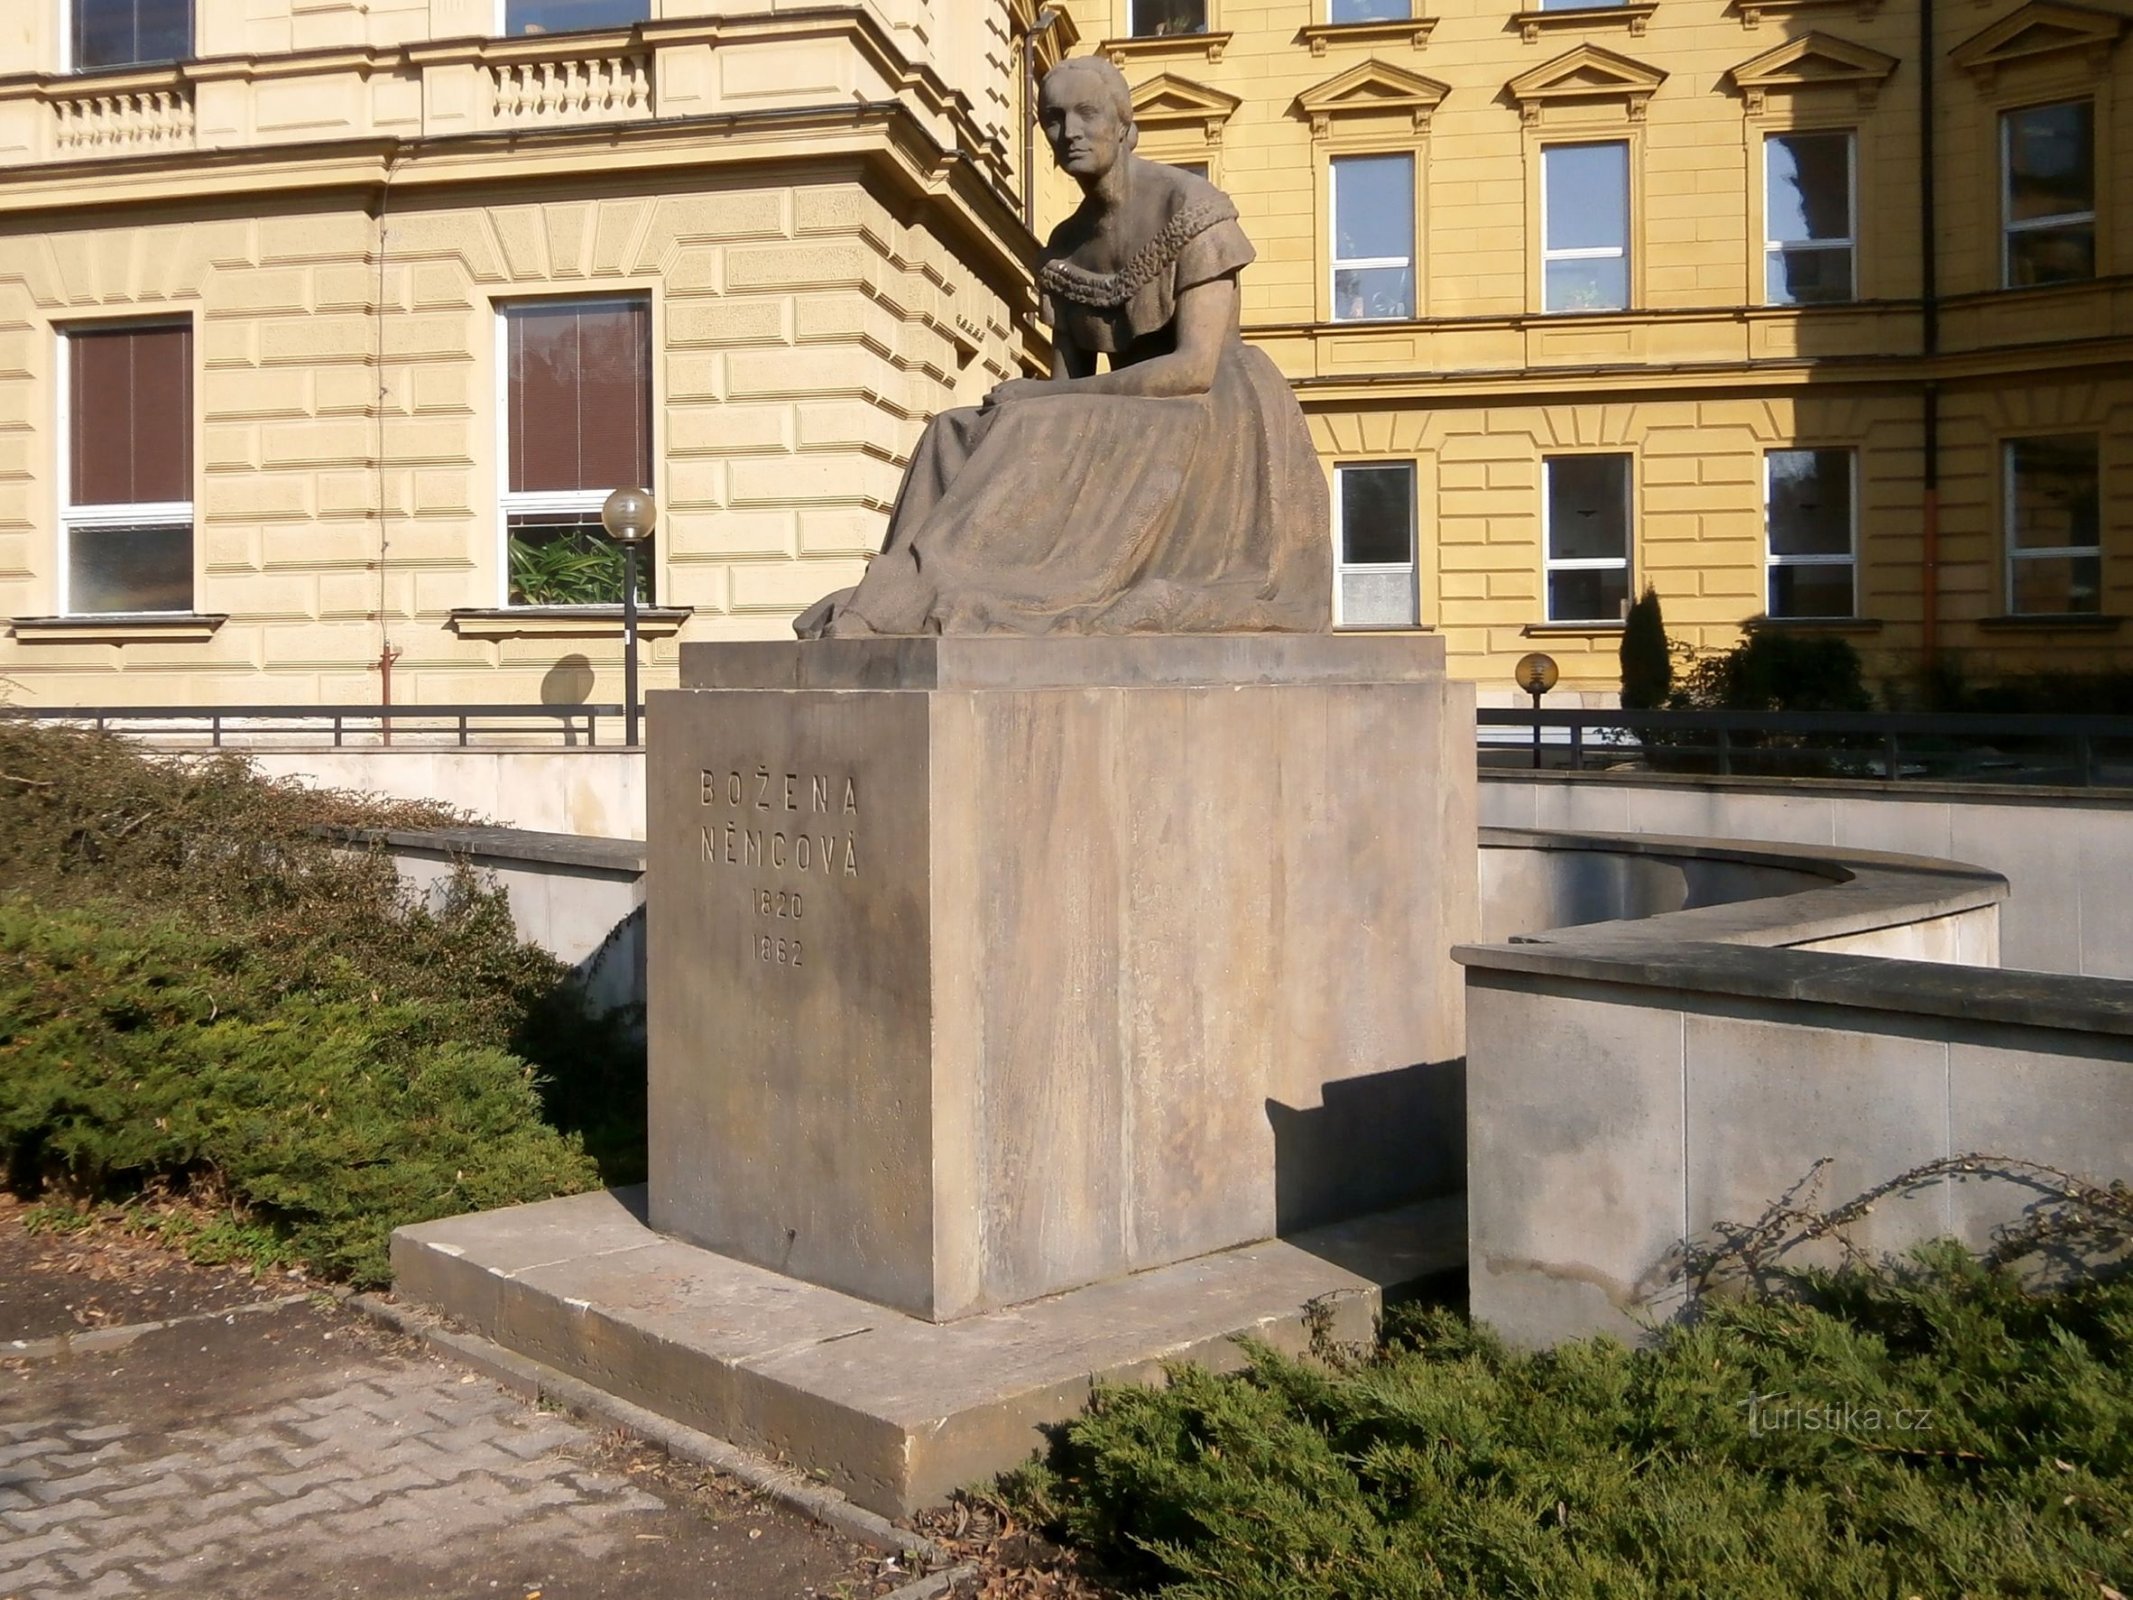 Pomnik Bożeny Němcovej (Hradec Králové, 26.3.2014 czerwca XNUMX)